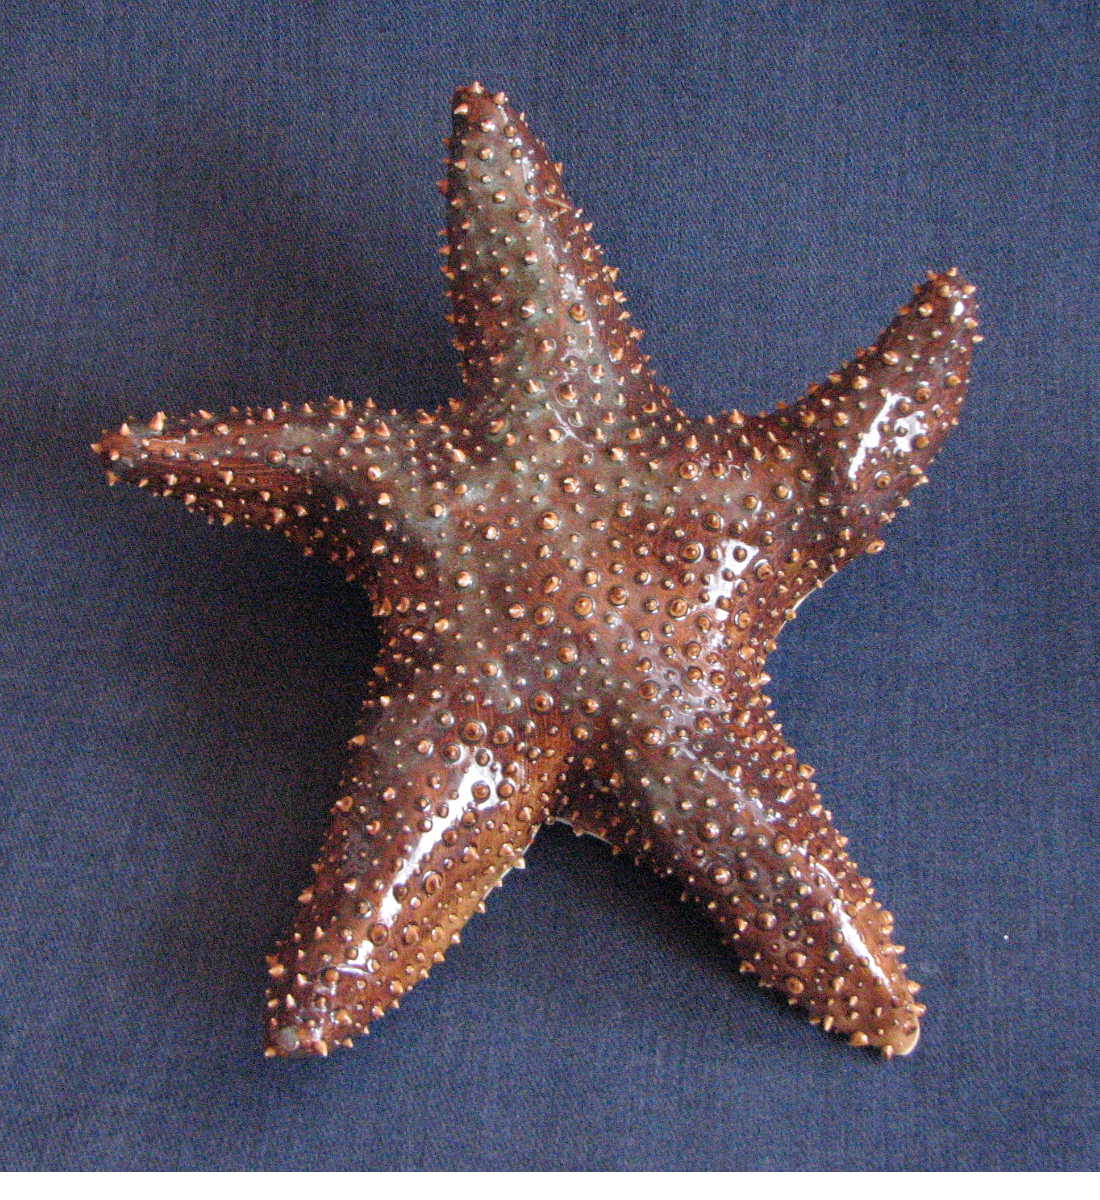 [starfish.Jon.35.JPG]